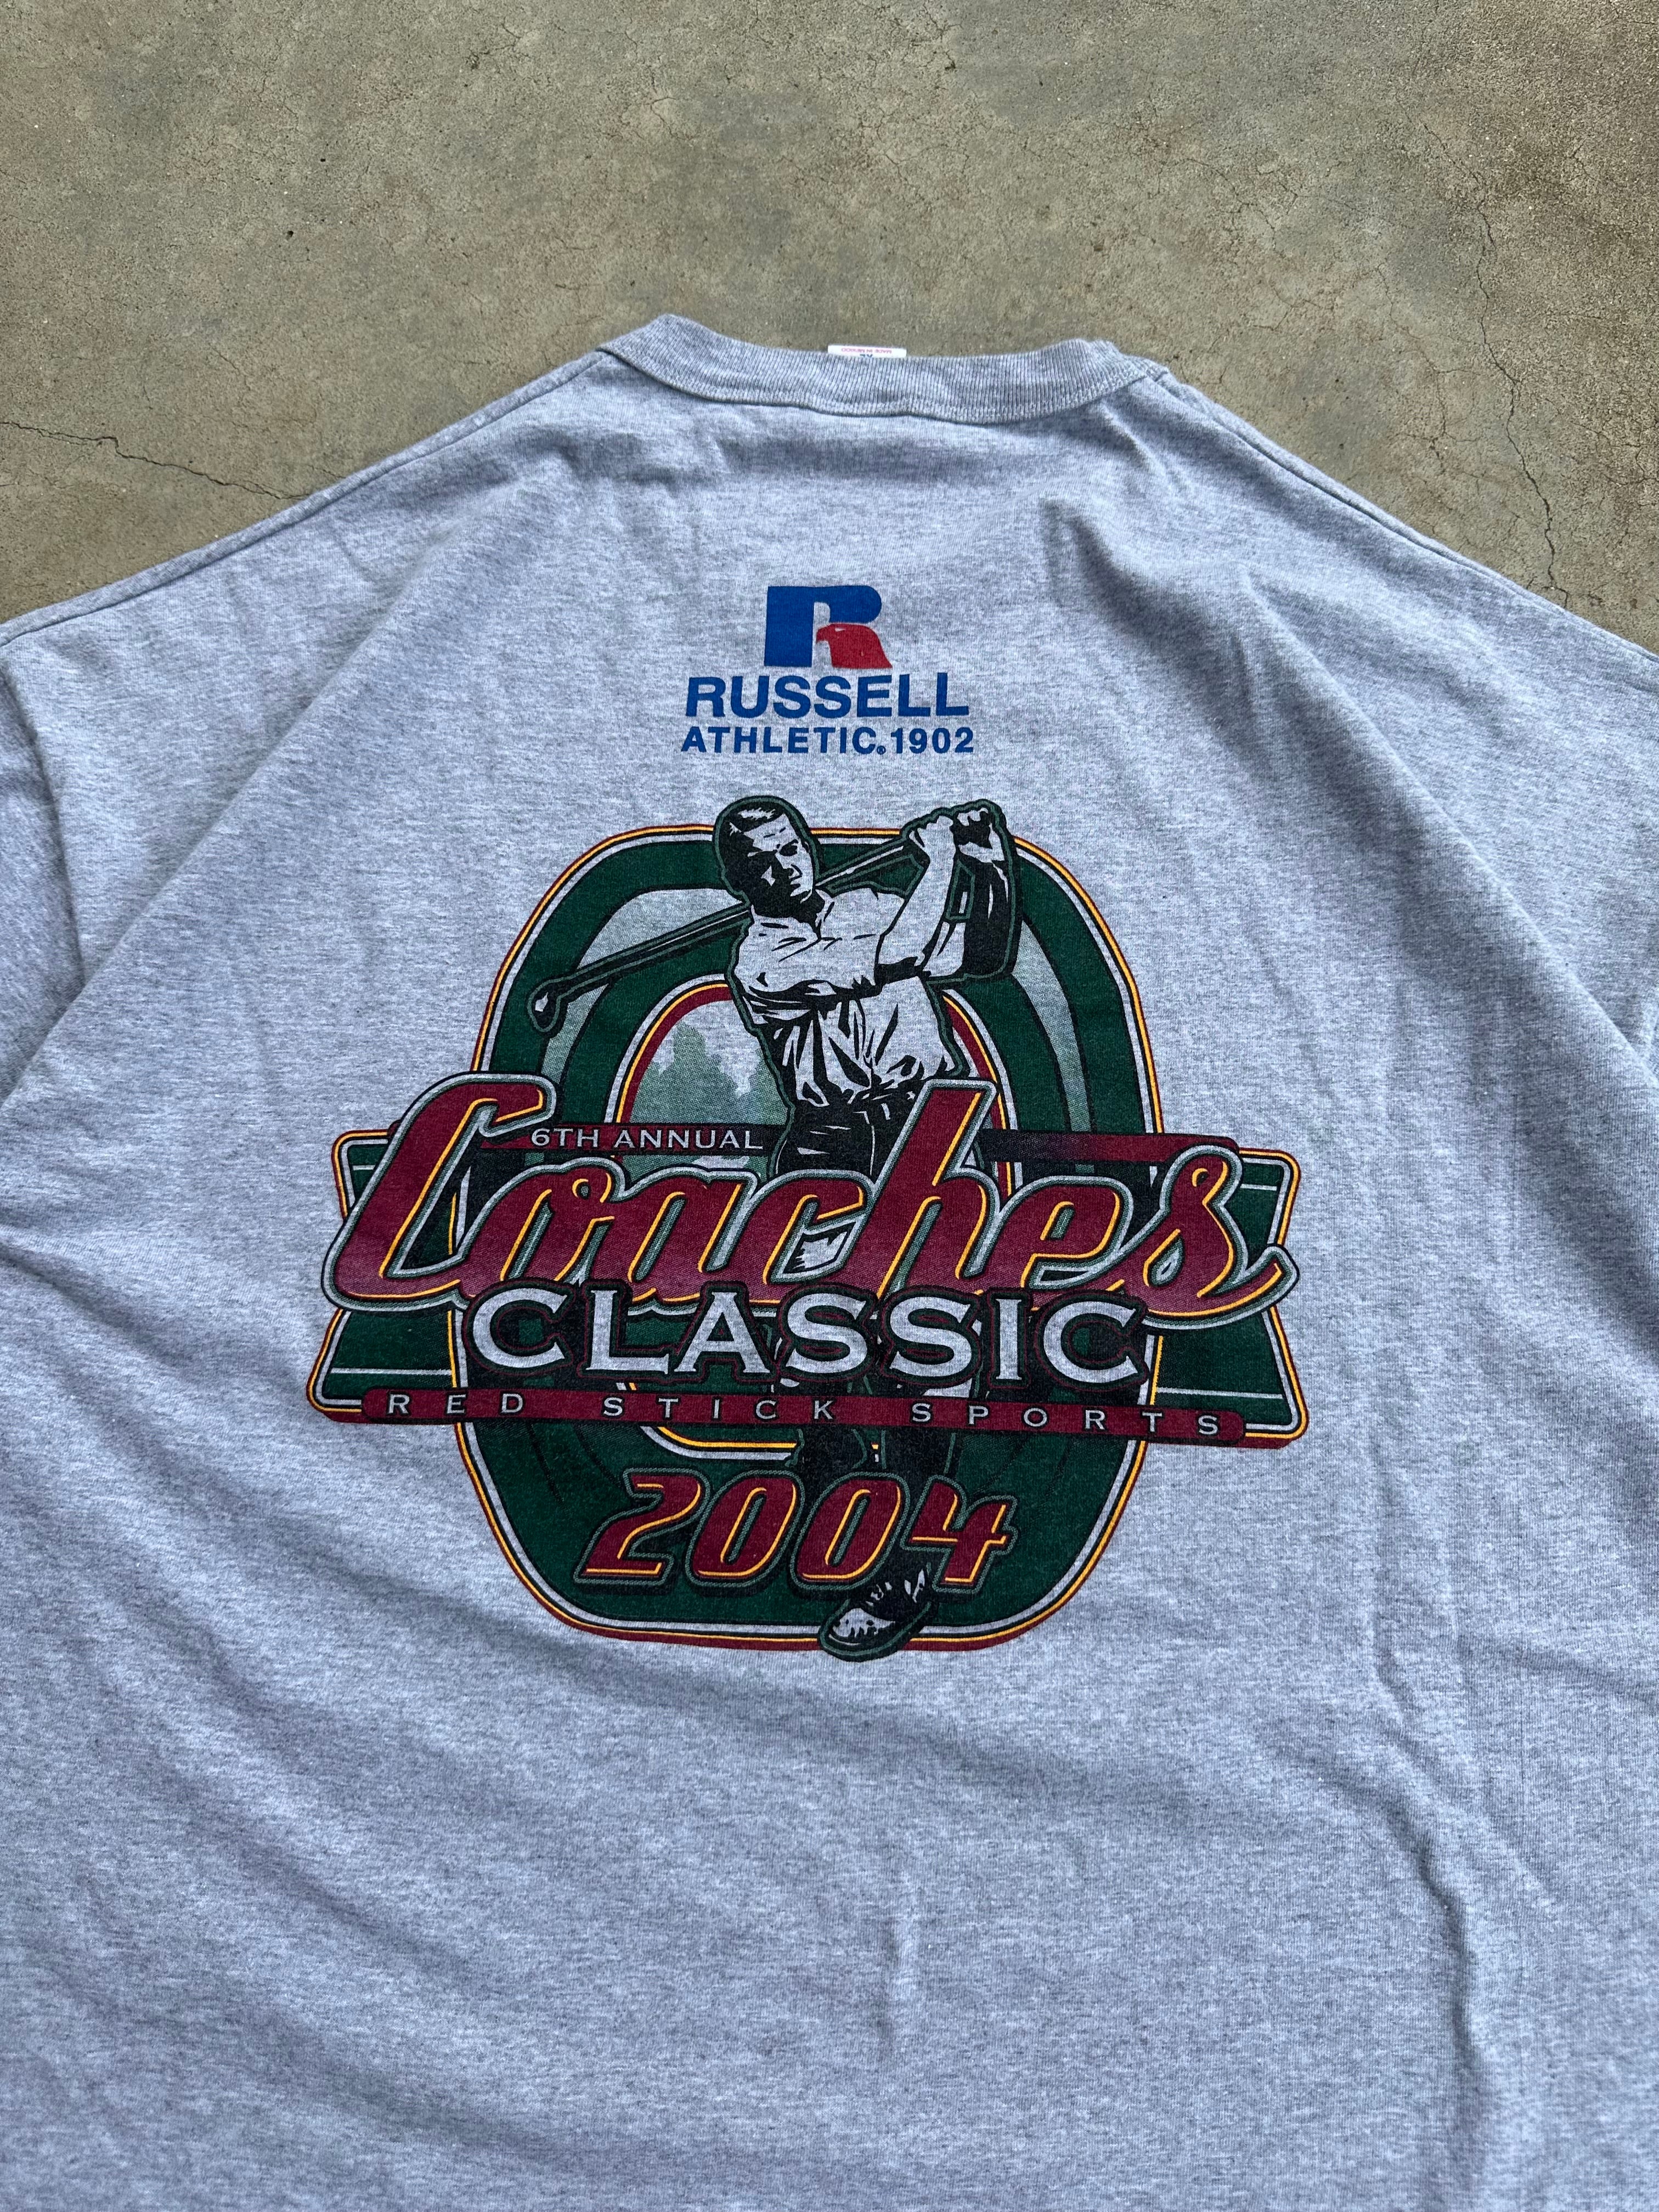 2004 Russell Coaches Golf Classic T-Shirt